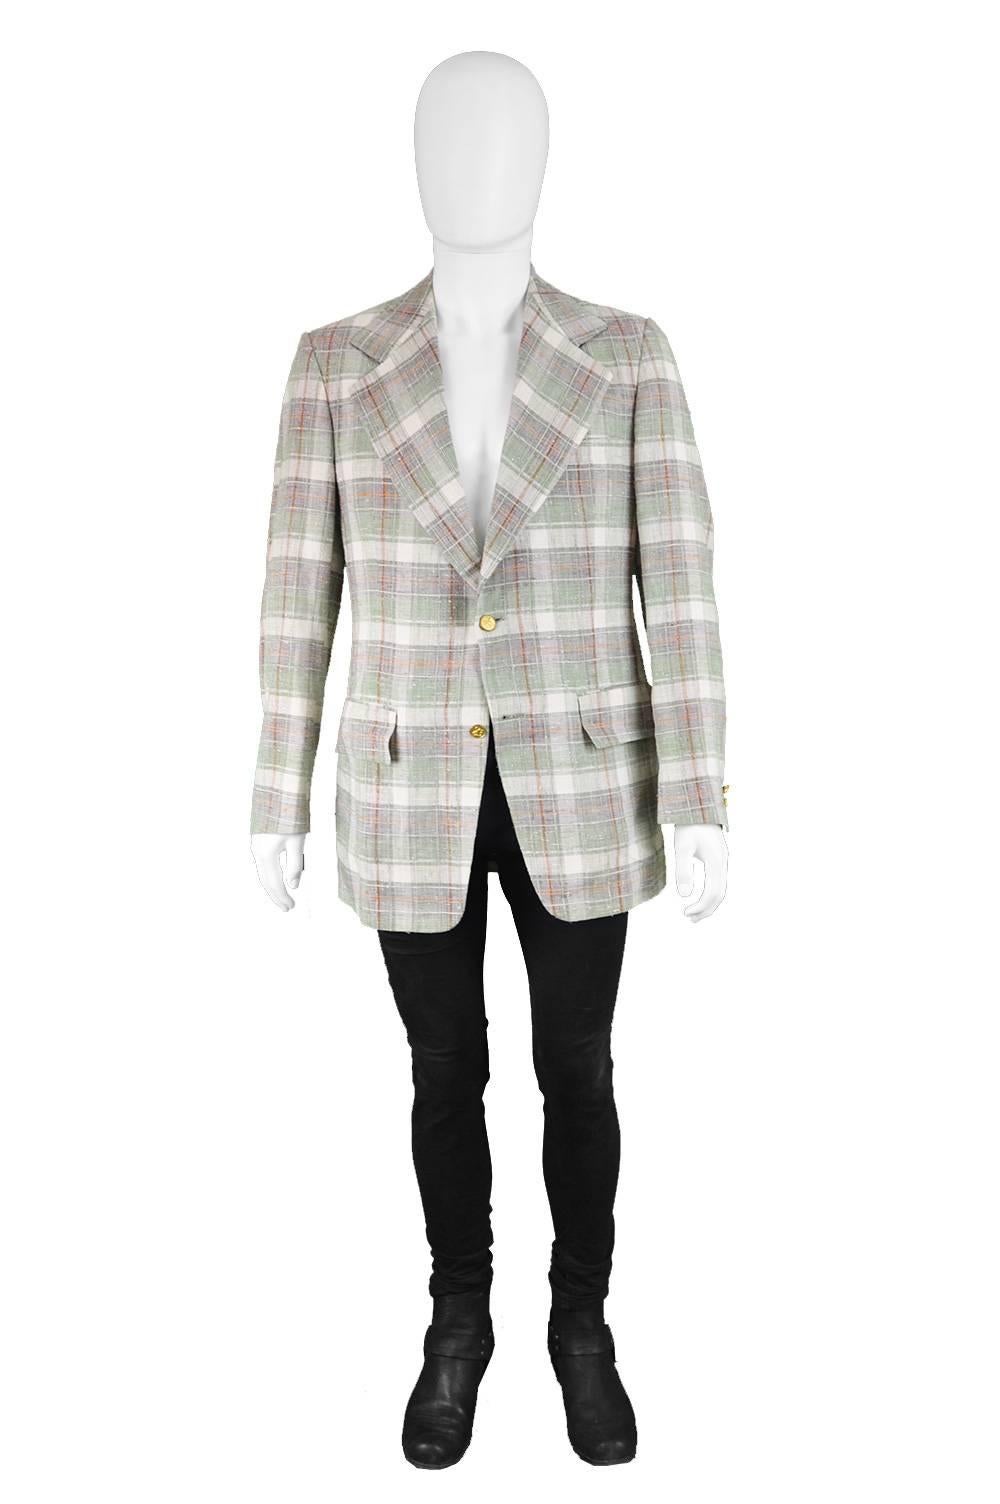 Geoffrey Beene Vintage Men's Checked Linen Sportcoat Blazer Jacket, 1970s

Estimated Size: Men's Medium. Please check measurements.
Chest - 40” / 101cm
Waist - 36” / 91cm
Length (Shoulder to Hem) - 30” / 76cm
Shoulder to Shoulder - 18” / 46cm
Sleeve